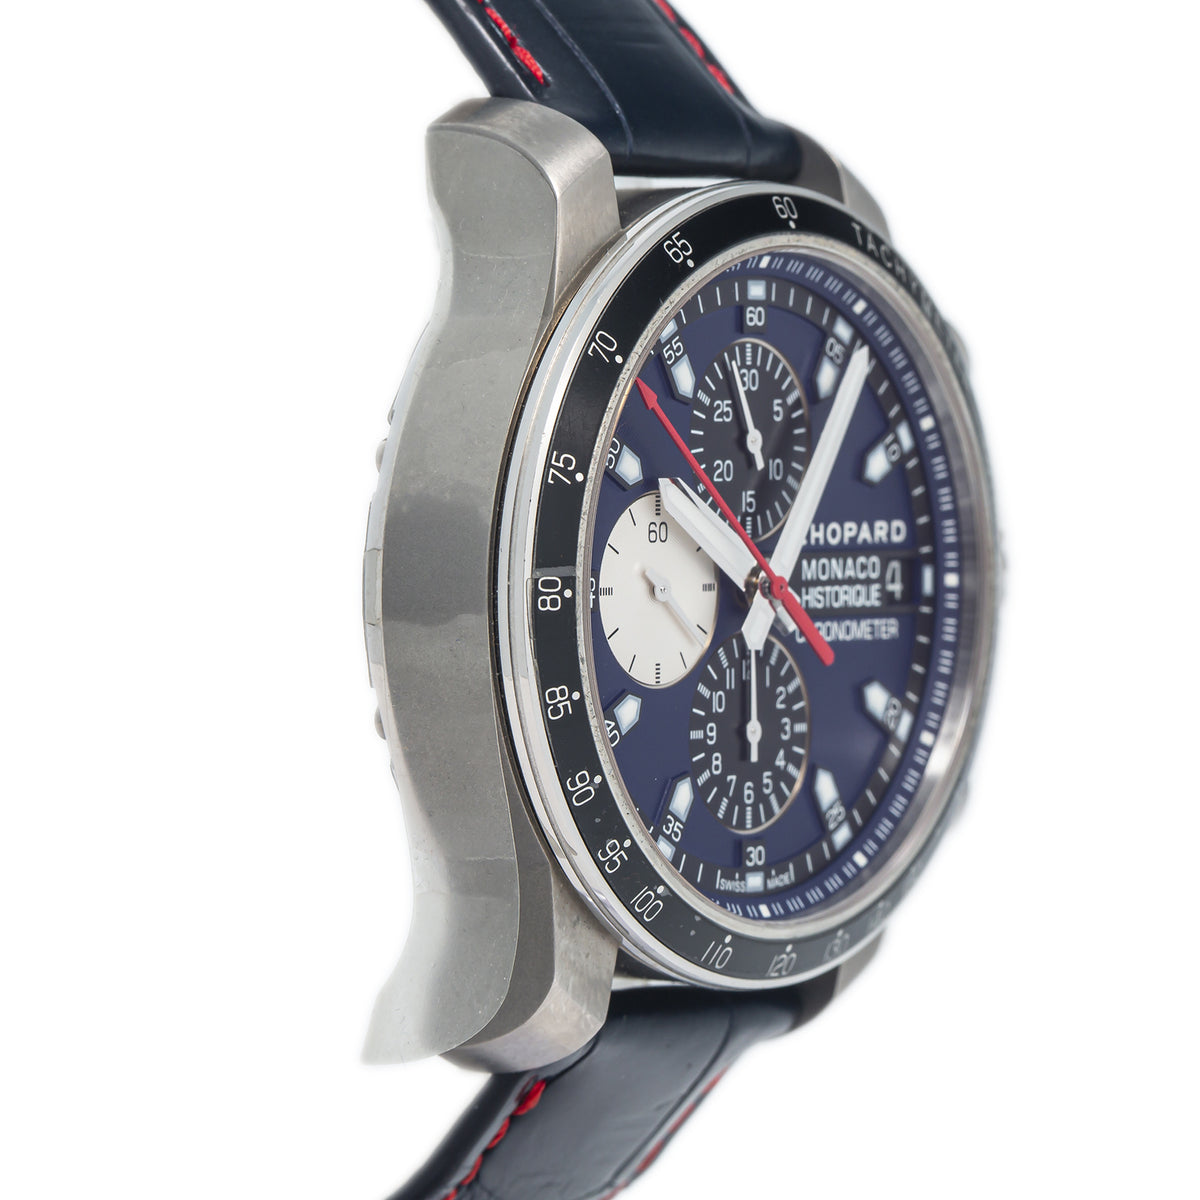 Chopard Monaco Historique 8570 Limited Edition Blue Dial Automatic Watch 45mm